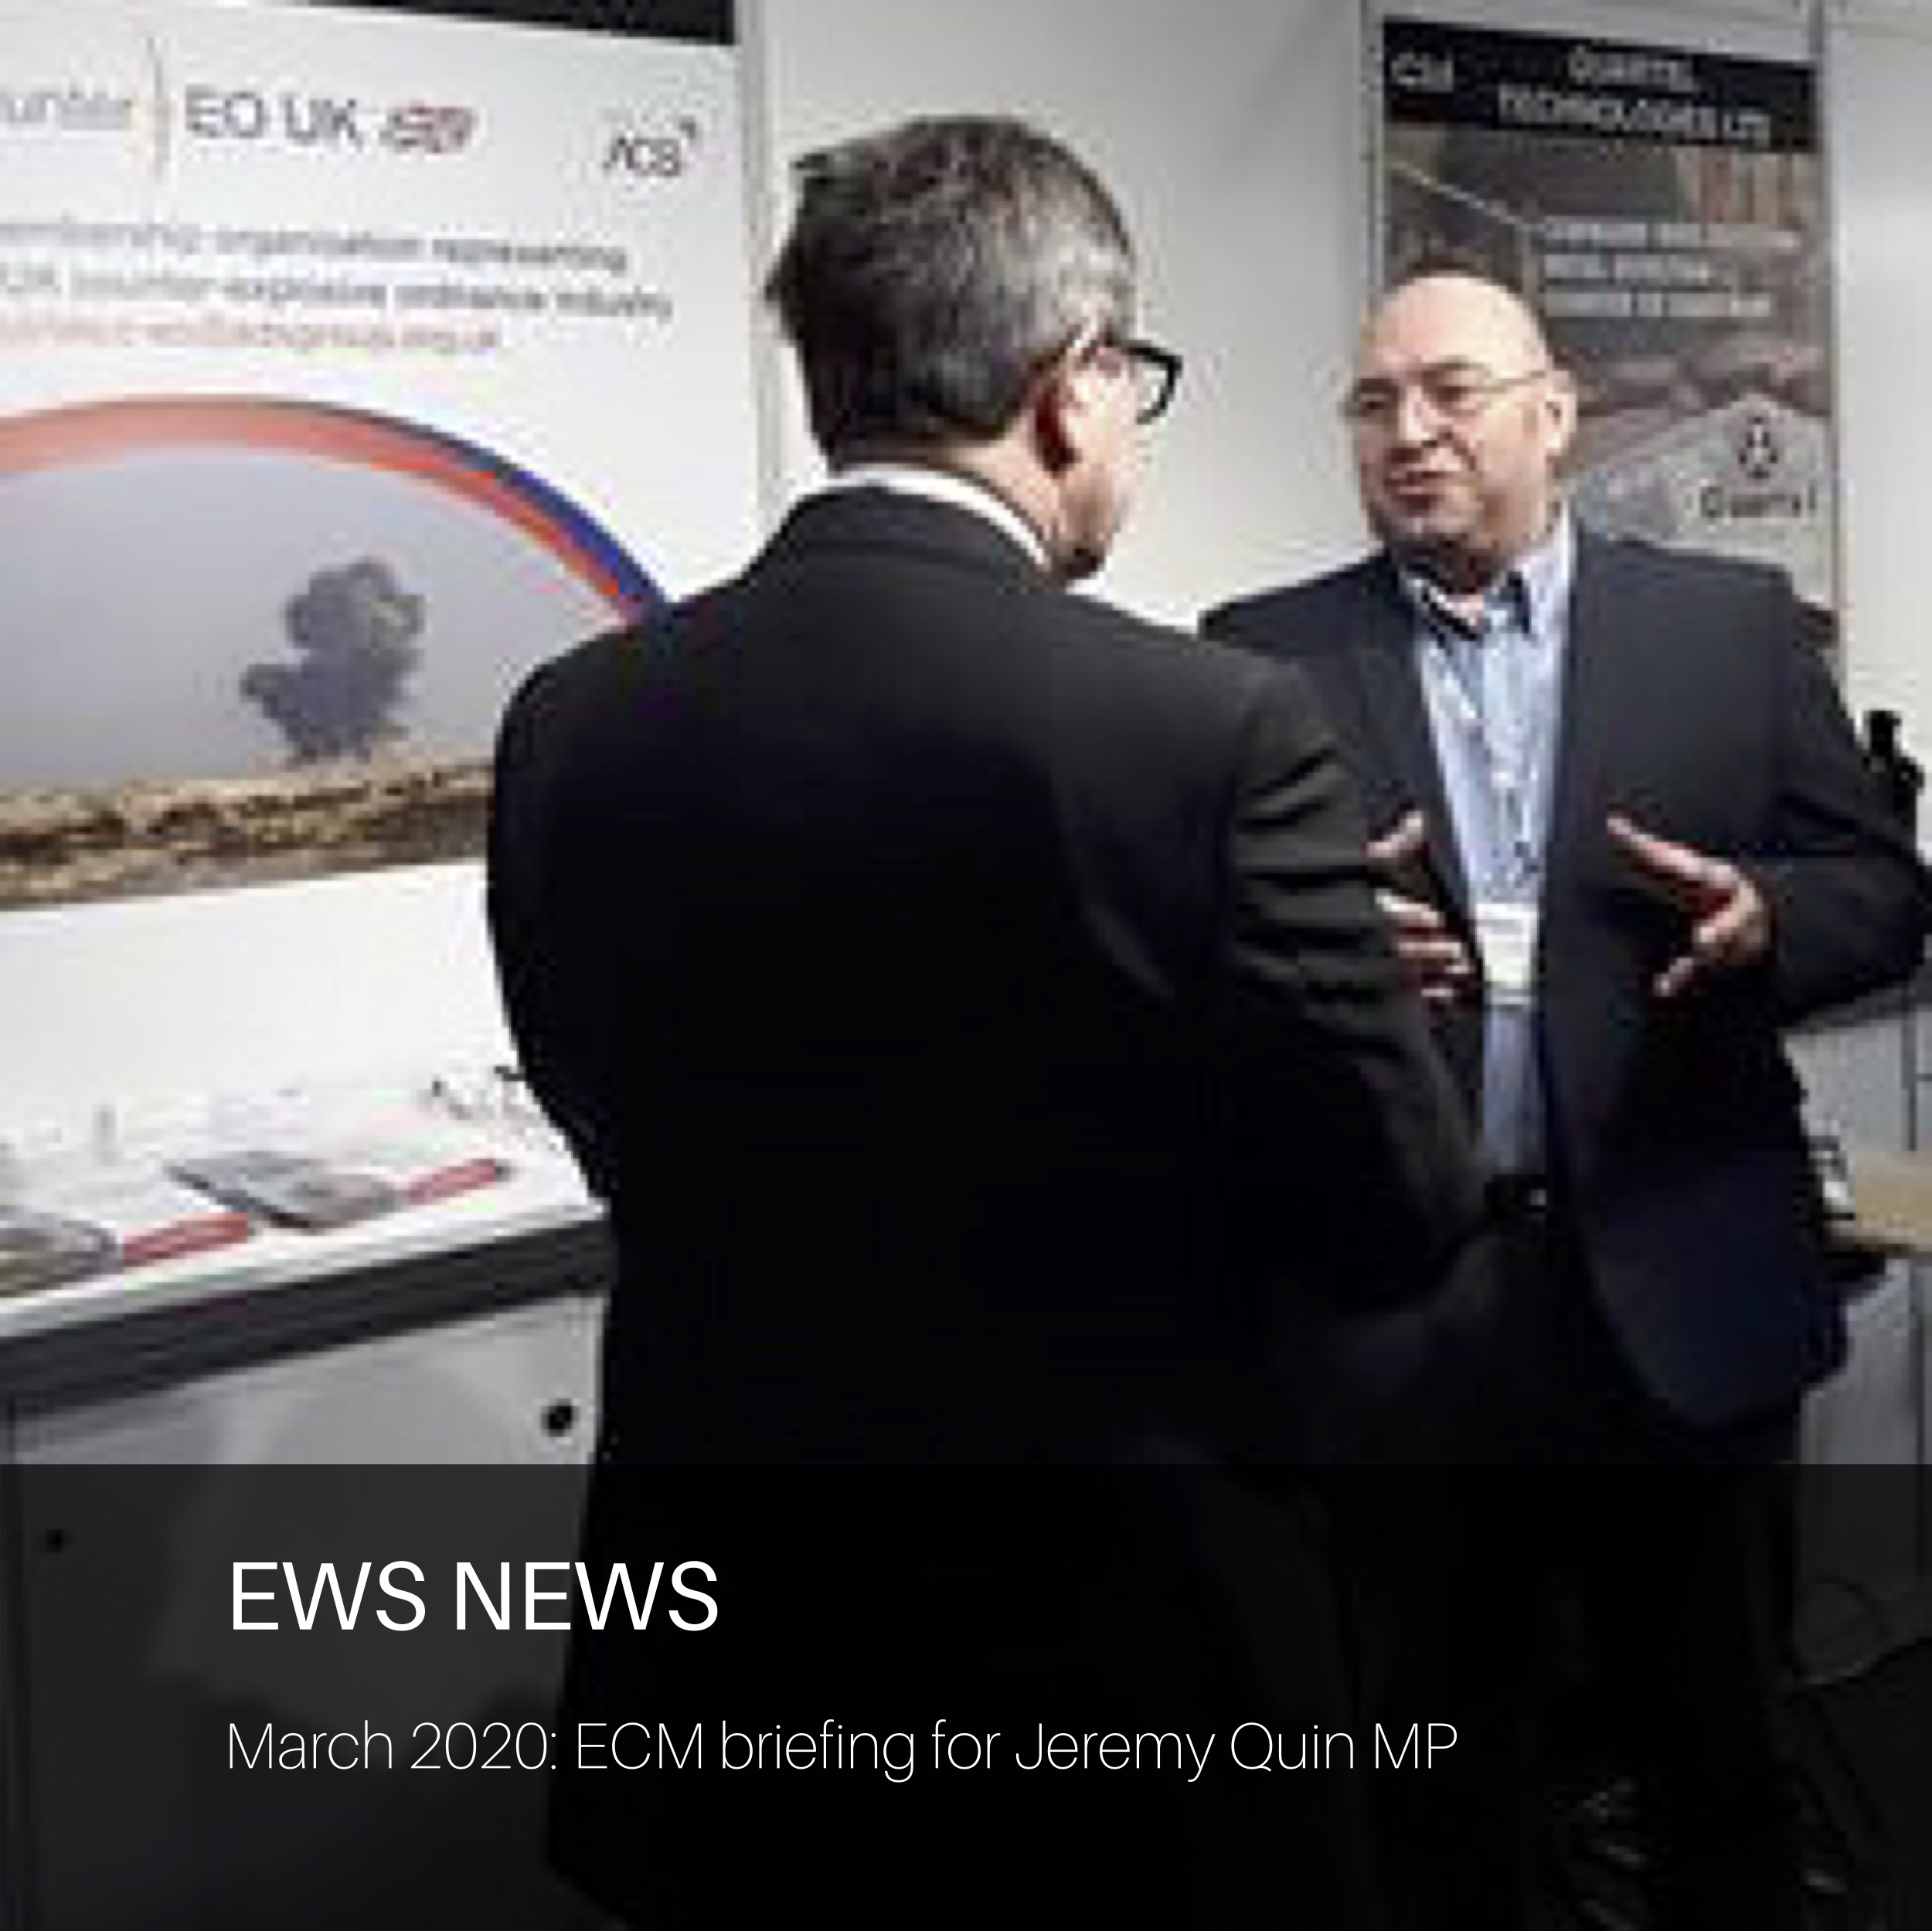 EWS news – ECM briefing for Jeremy Quin MP